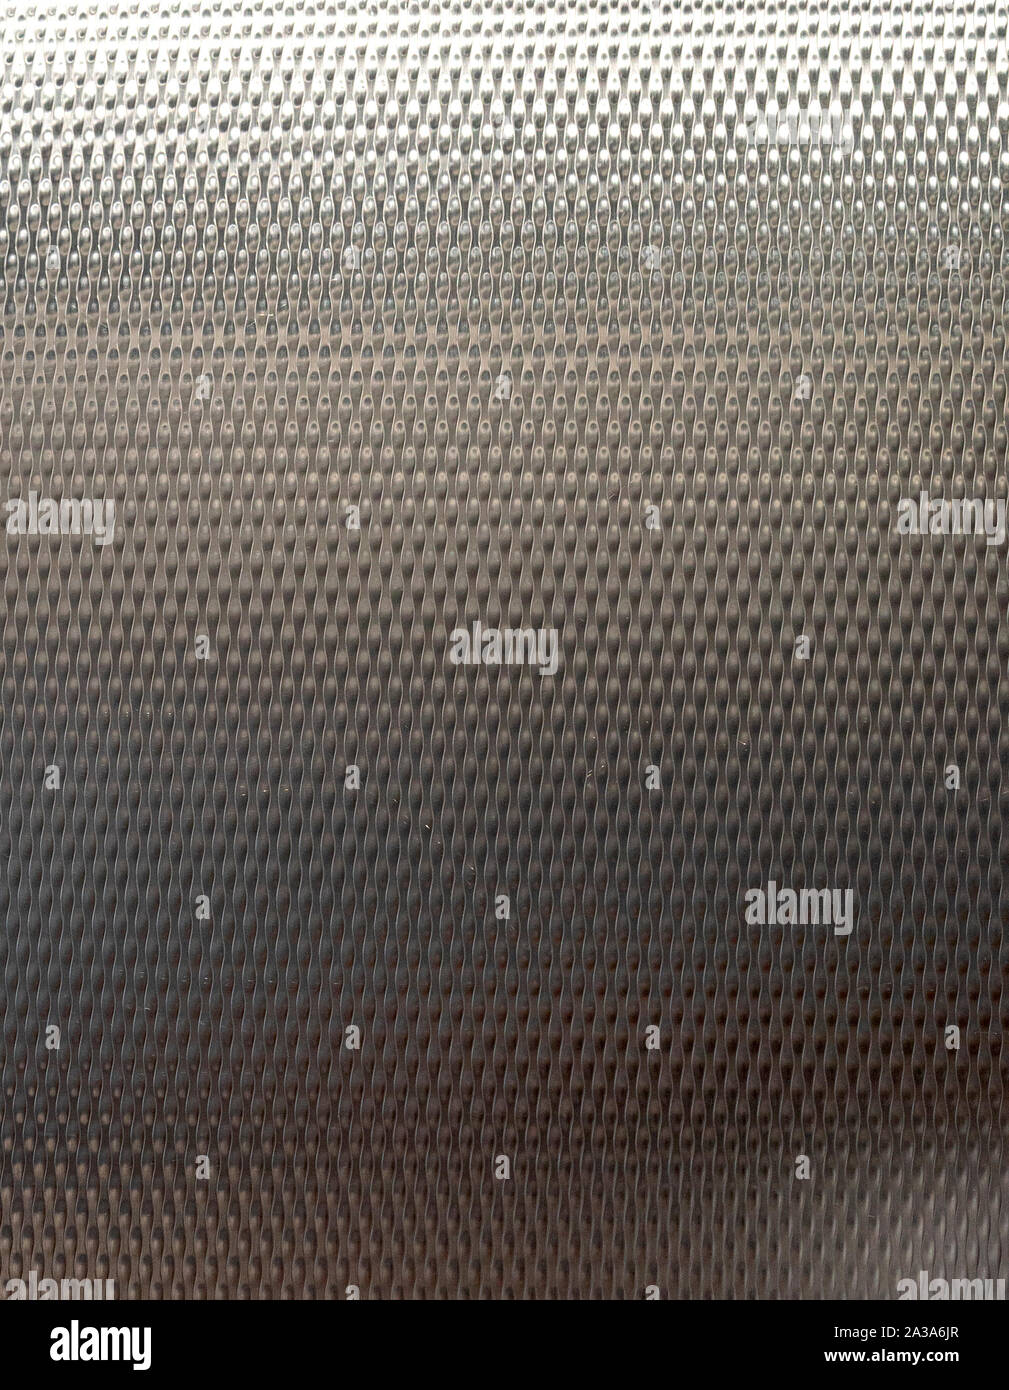 Shiny, corrugated metal background. Metallic list with rhombus shapes ...